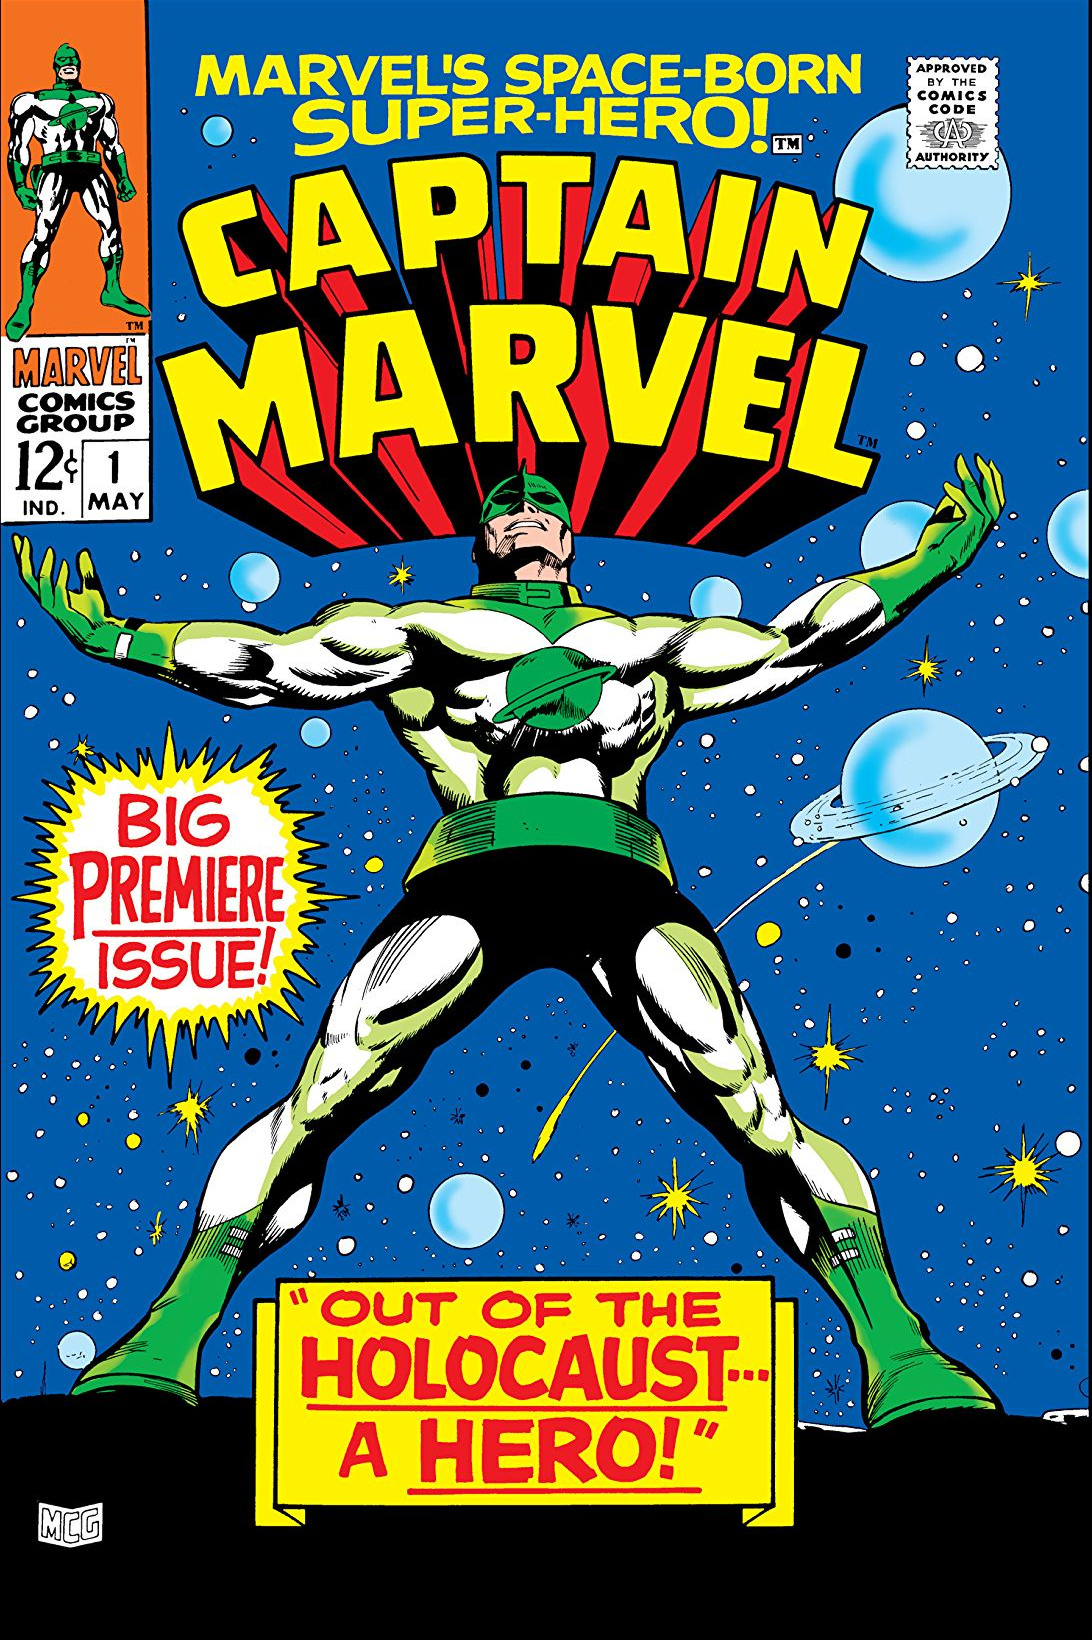 Lloyd S Beware The Blog Before Captain Marvel There Was Captain Marvel The Evolution Of The Character 1939 To 19